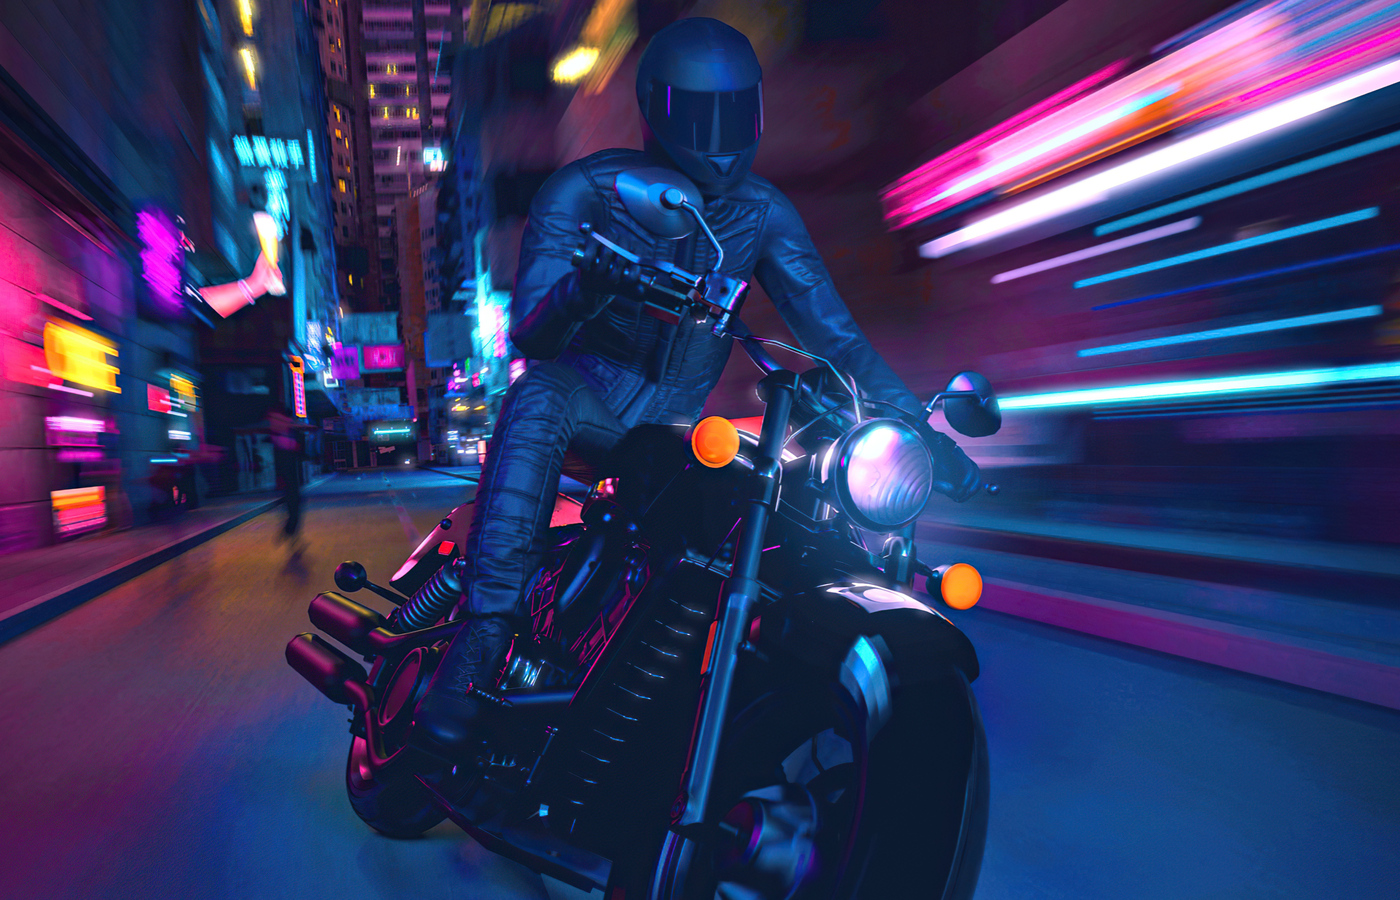 motor-biker-in-city-ri.jpg